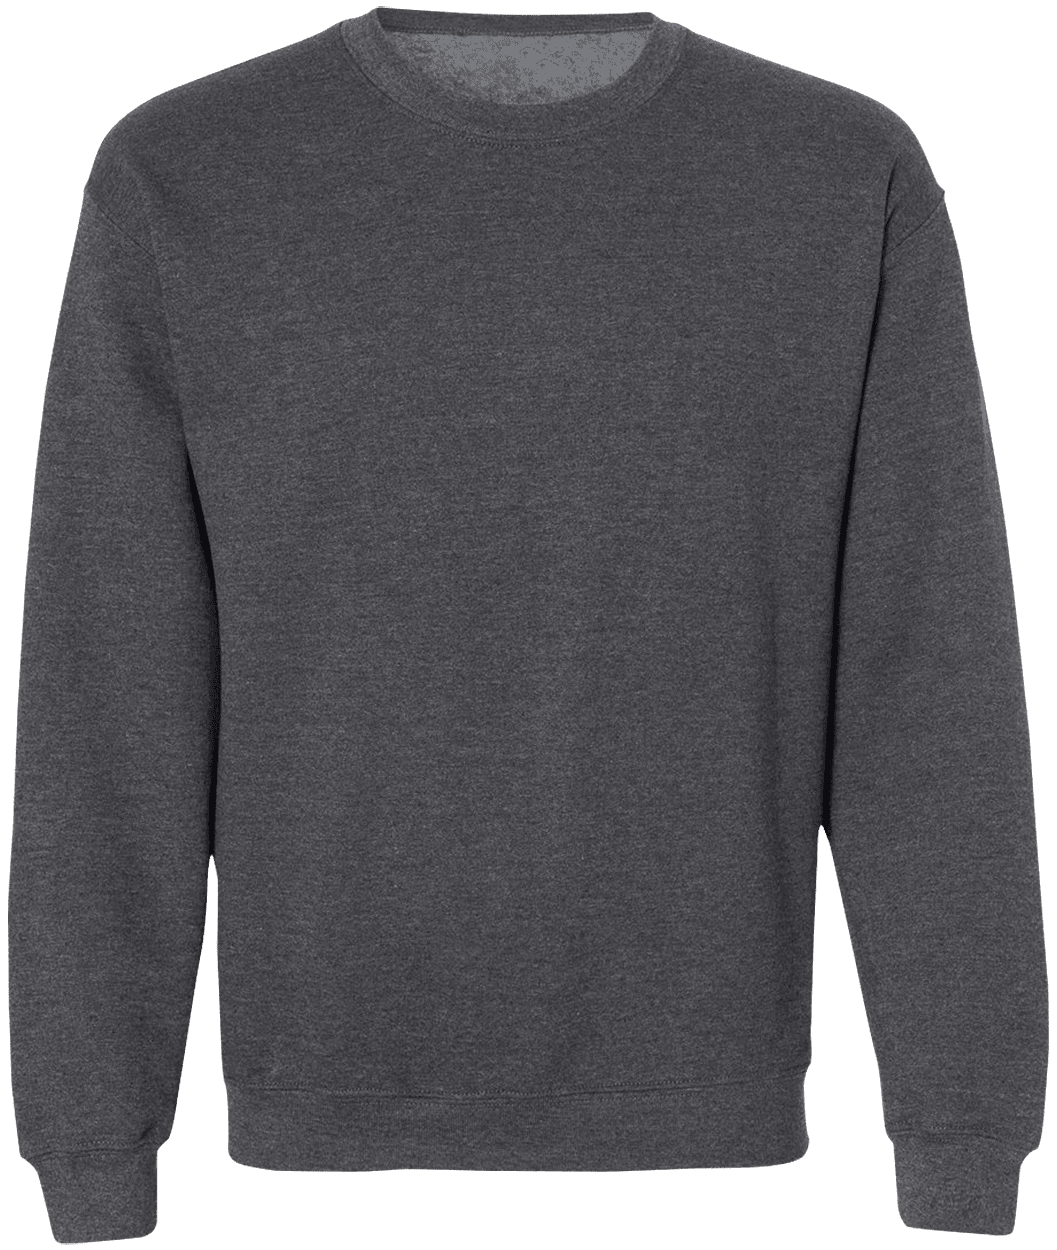 Z65x Crewneck Pullover Sweatshirt - CustomCat